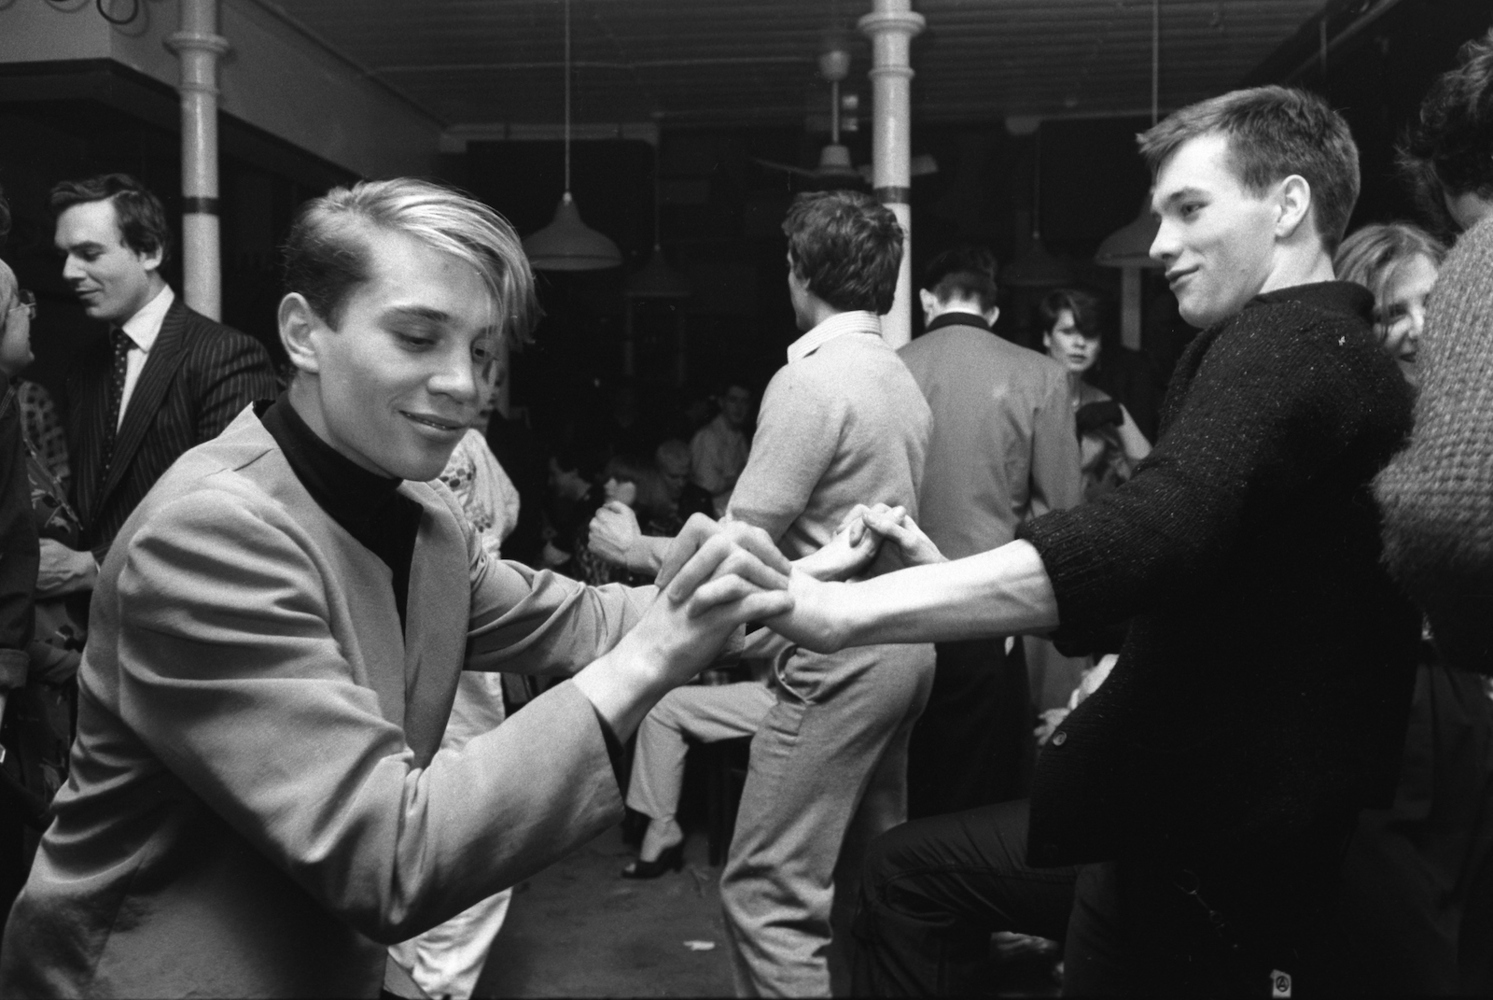 Boys dancing together, Clubbing, London, 1980